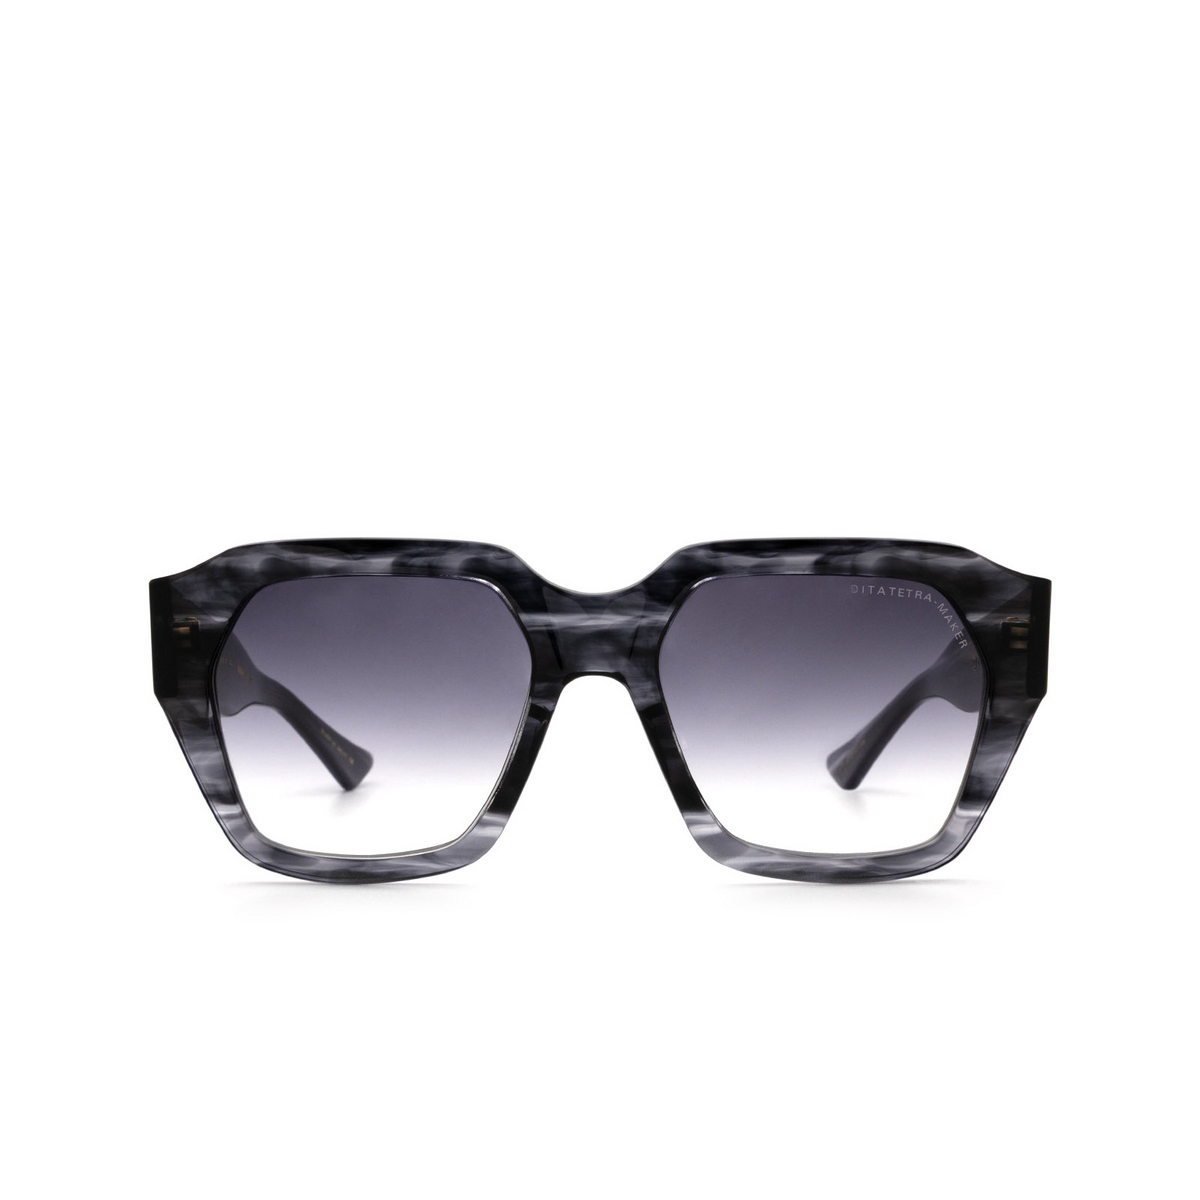 Dita TETRAMAKER Sunglasses BLK-GLD Black Gold - front view